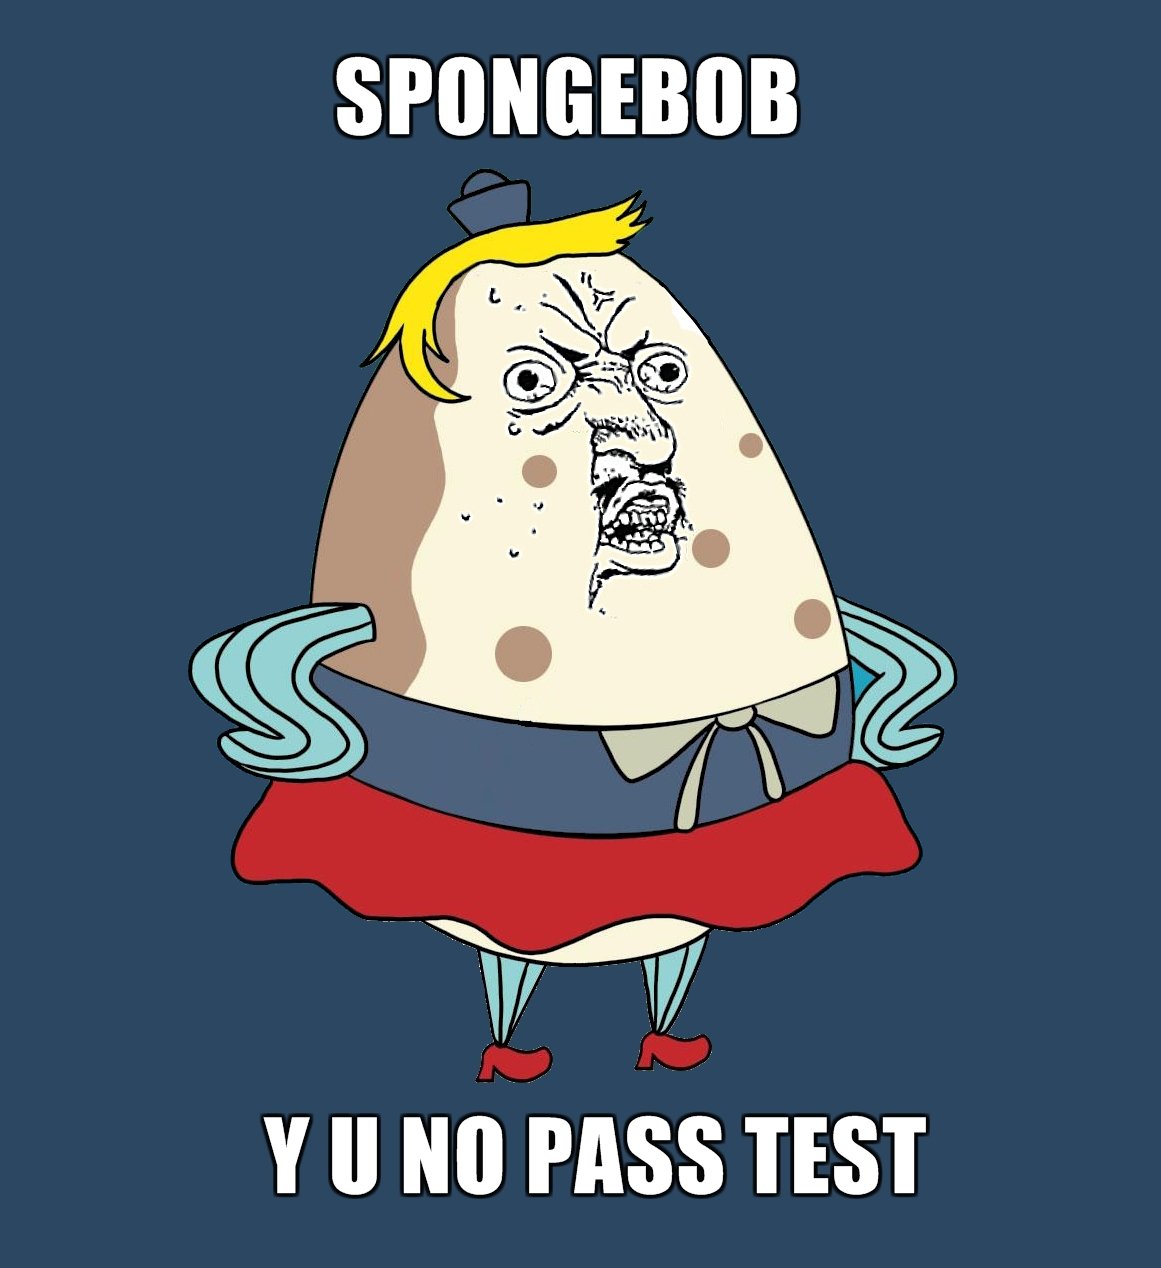 Y U NO SpongeBob Squarepants